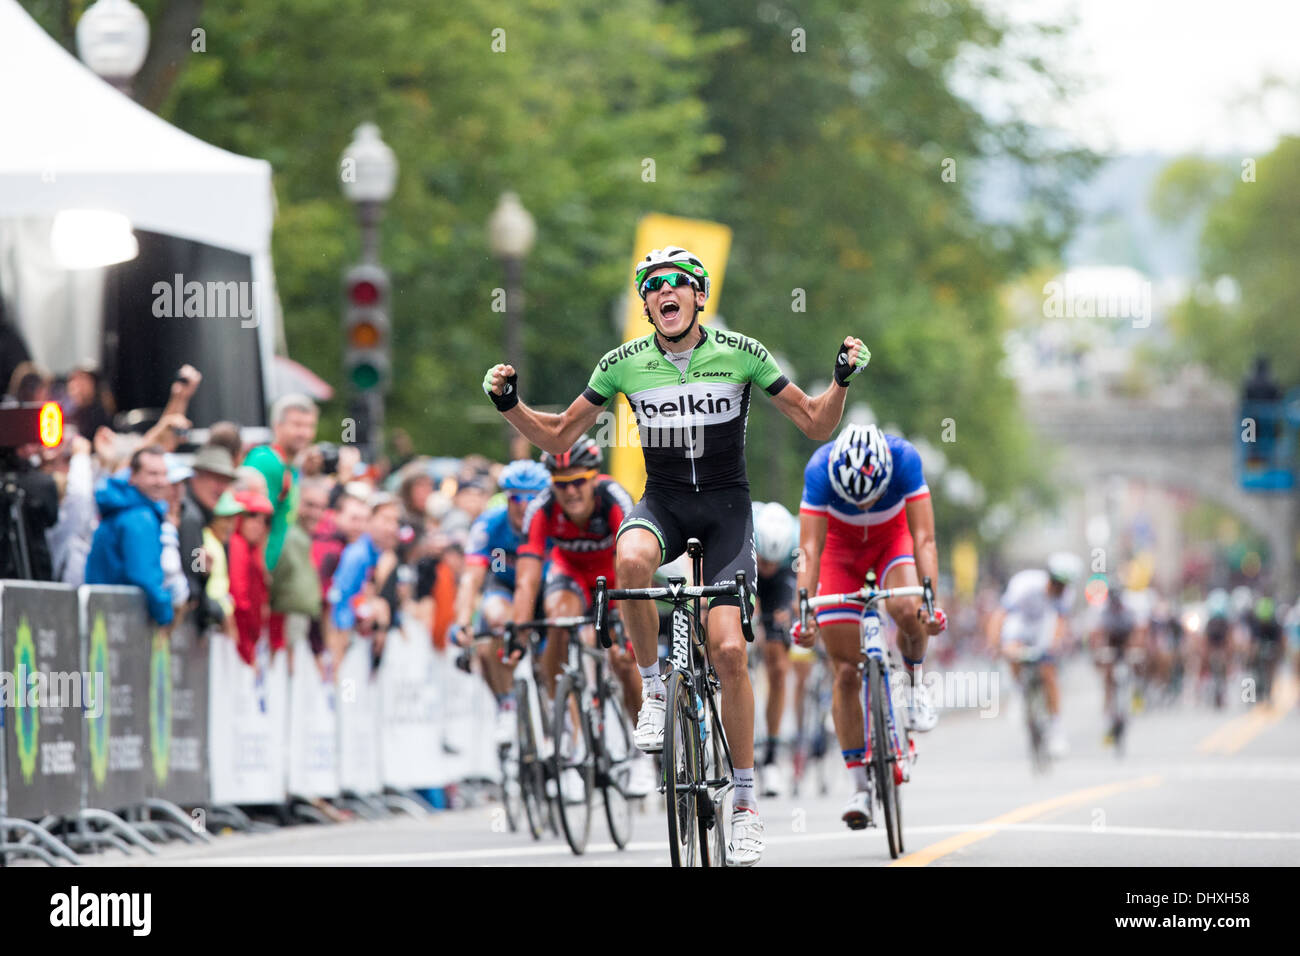 Dutch cyclist Robert Gesink of team Belkin wins the 2013 Grand Prix Cycliste de Québec. Stock Photo